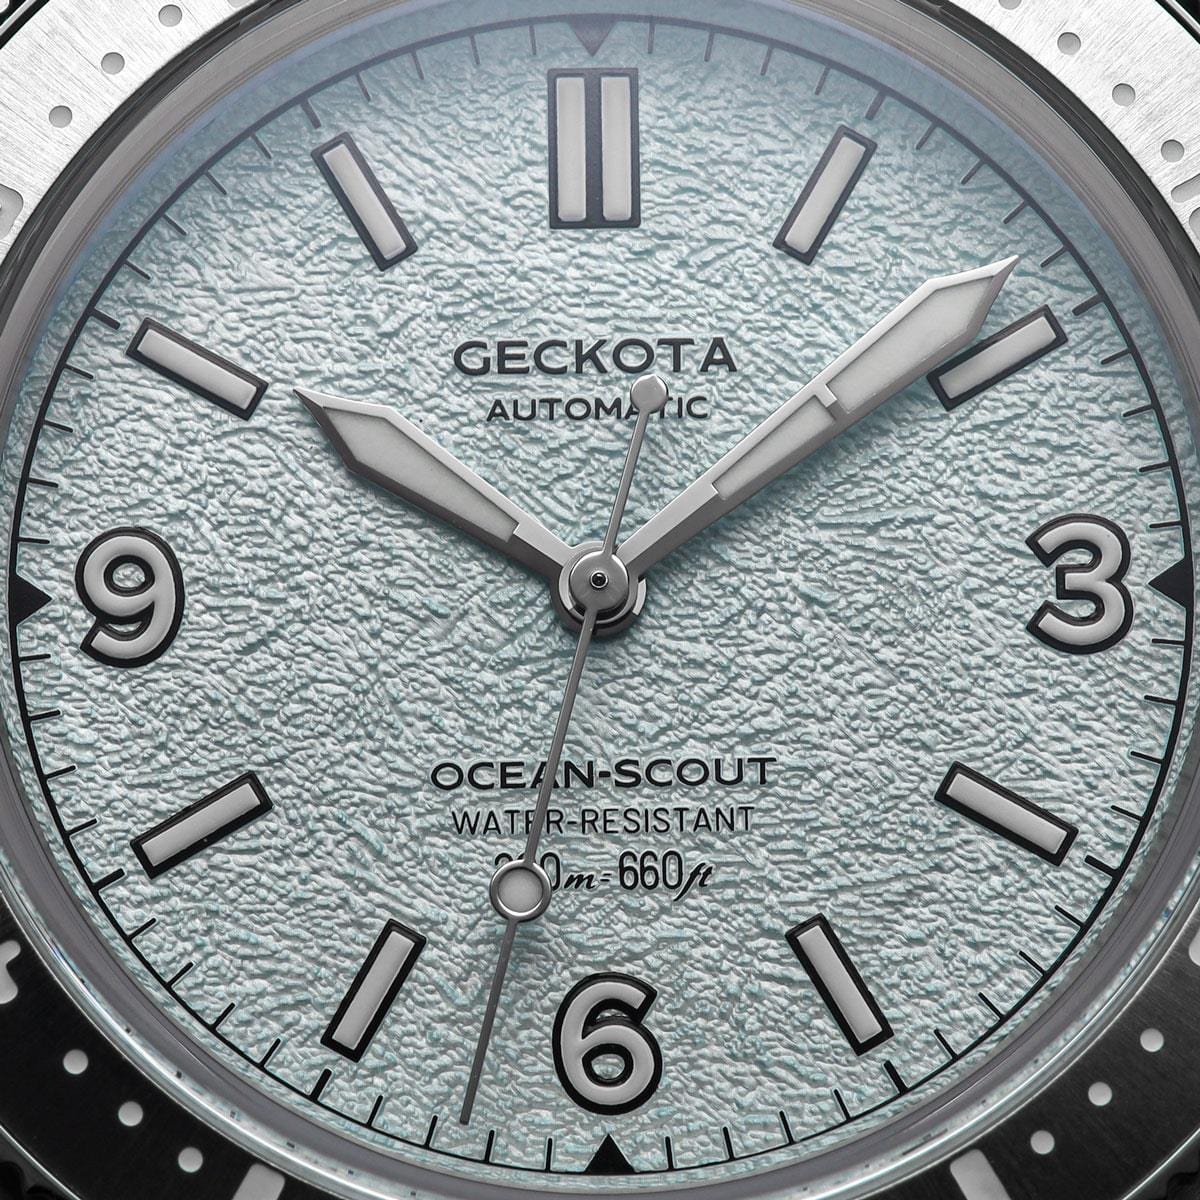 Geckota Ocean-Scout Dive Watch - Frost - Grey Nylon Strap